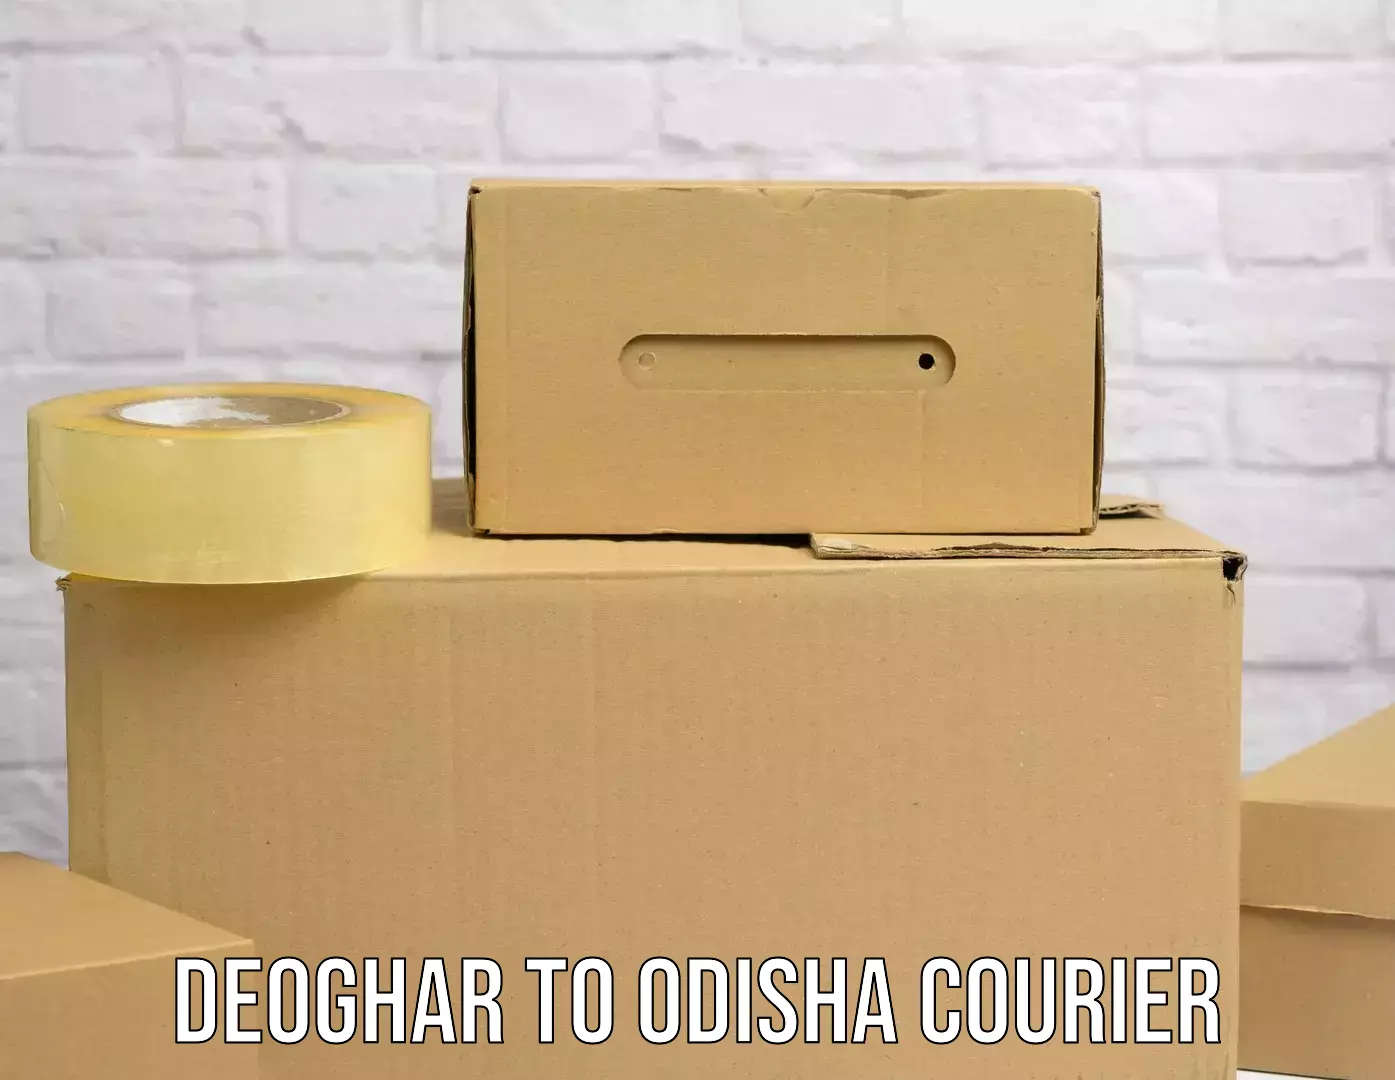 Courier service comparison Deoghar to Baripada